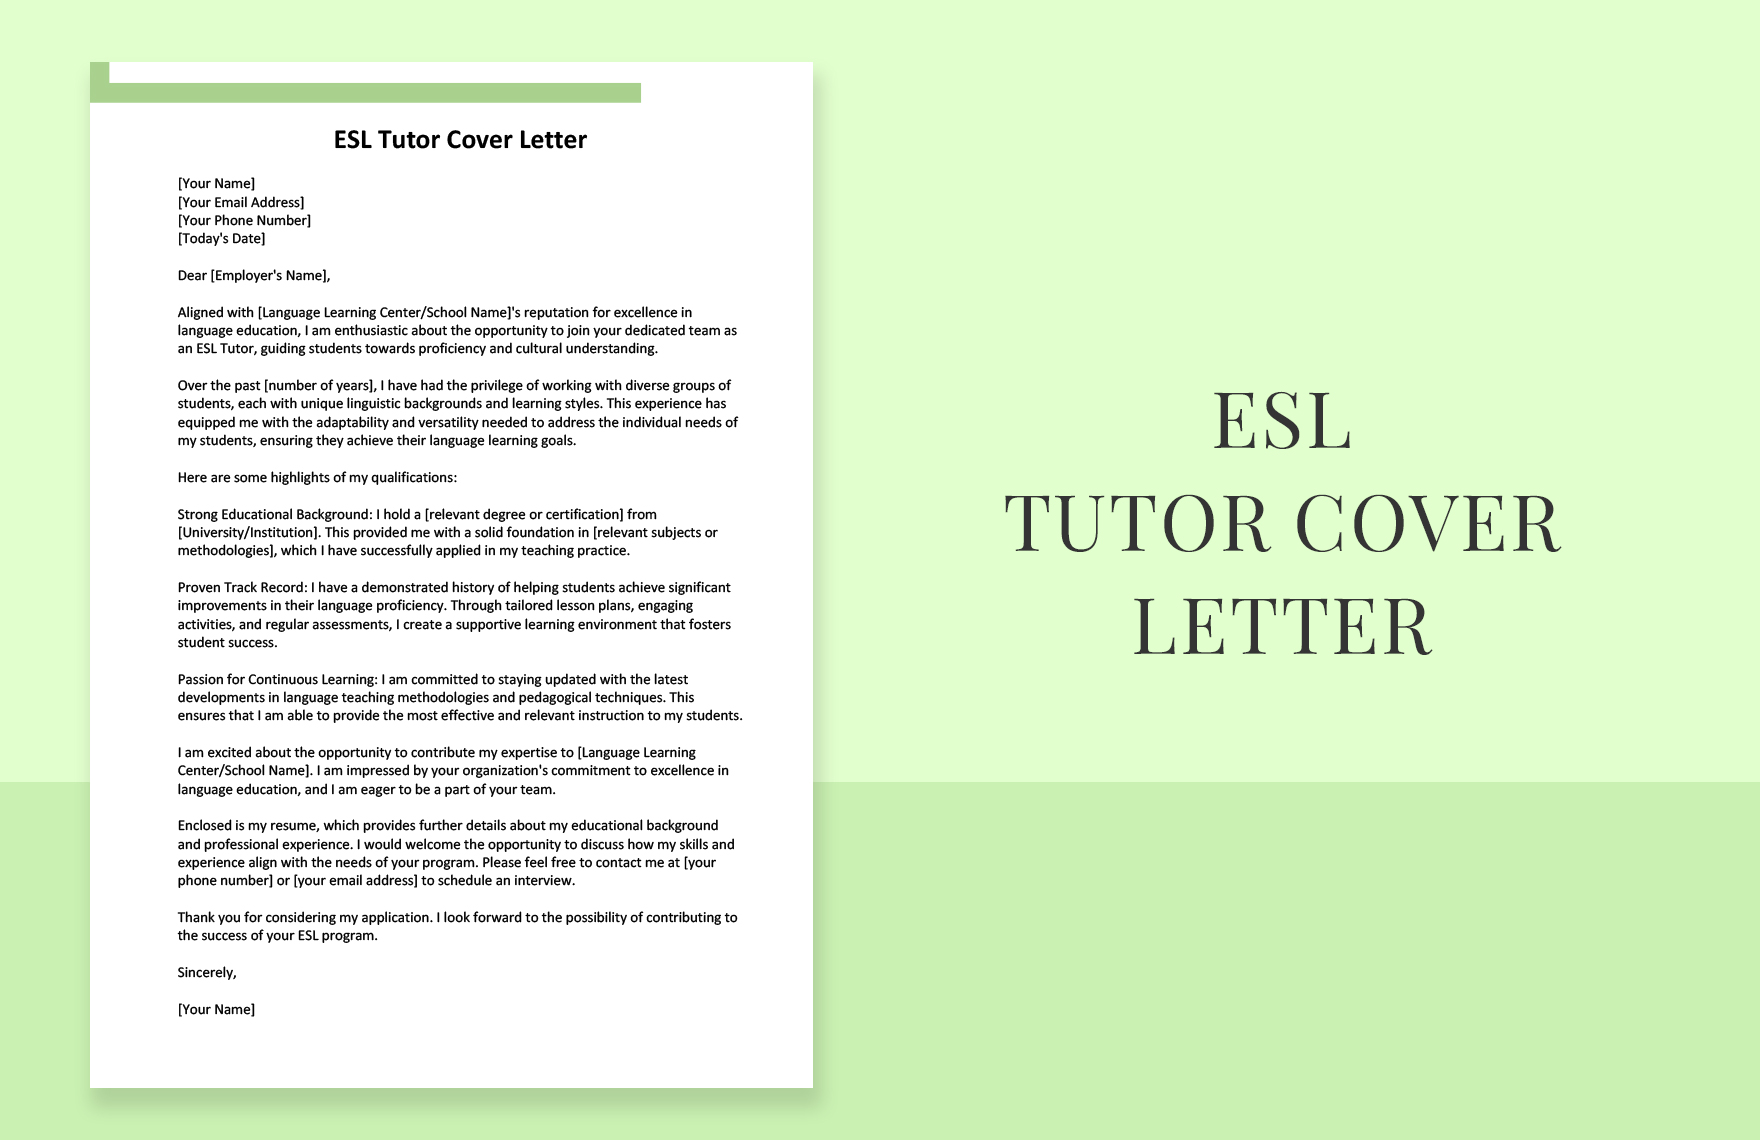 ESL Tutor Cover Letter in Word, Google Docs